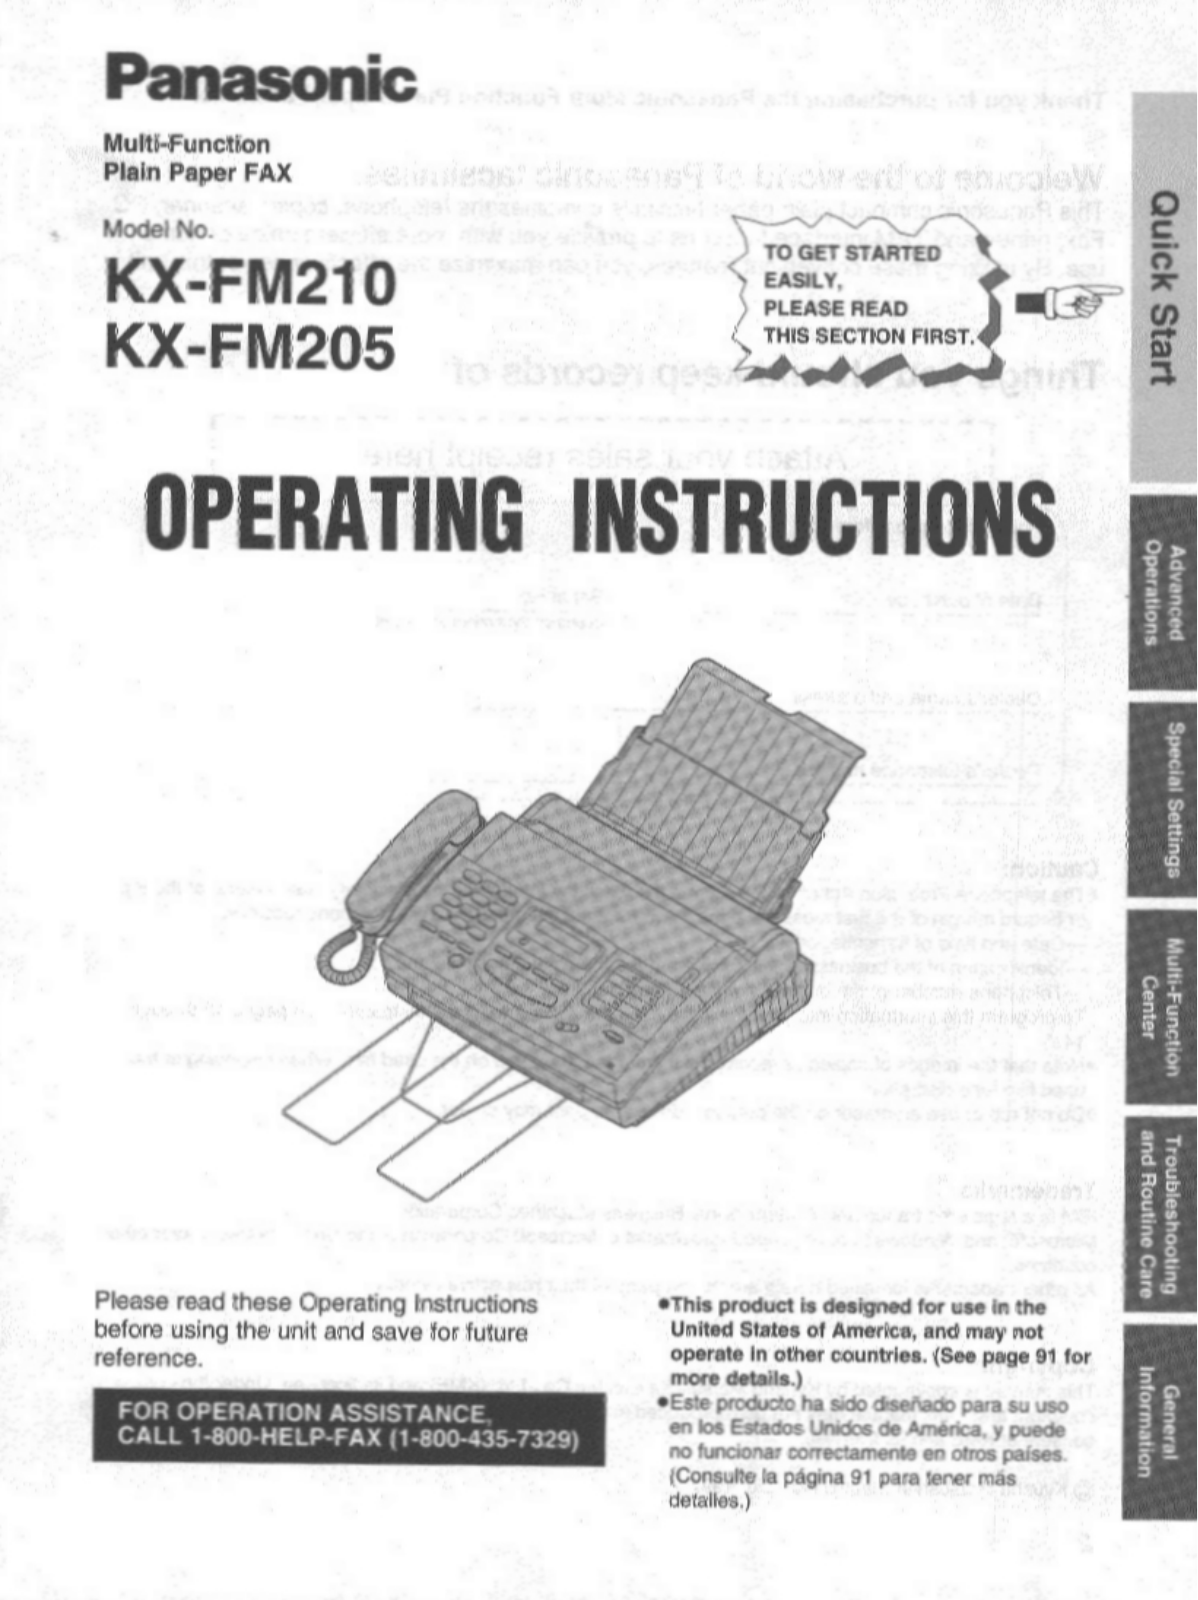 Panasonic KX-FM205, KX-FM210 Operating Instruction